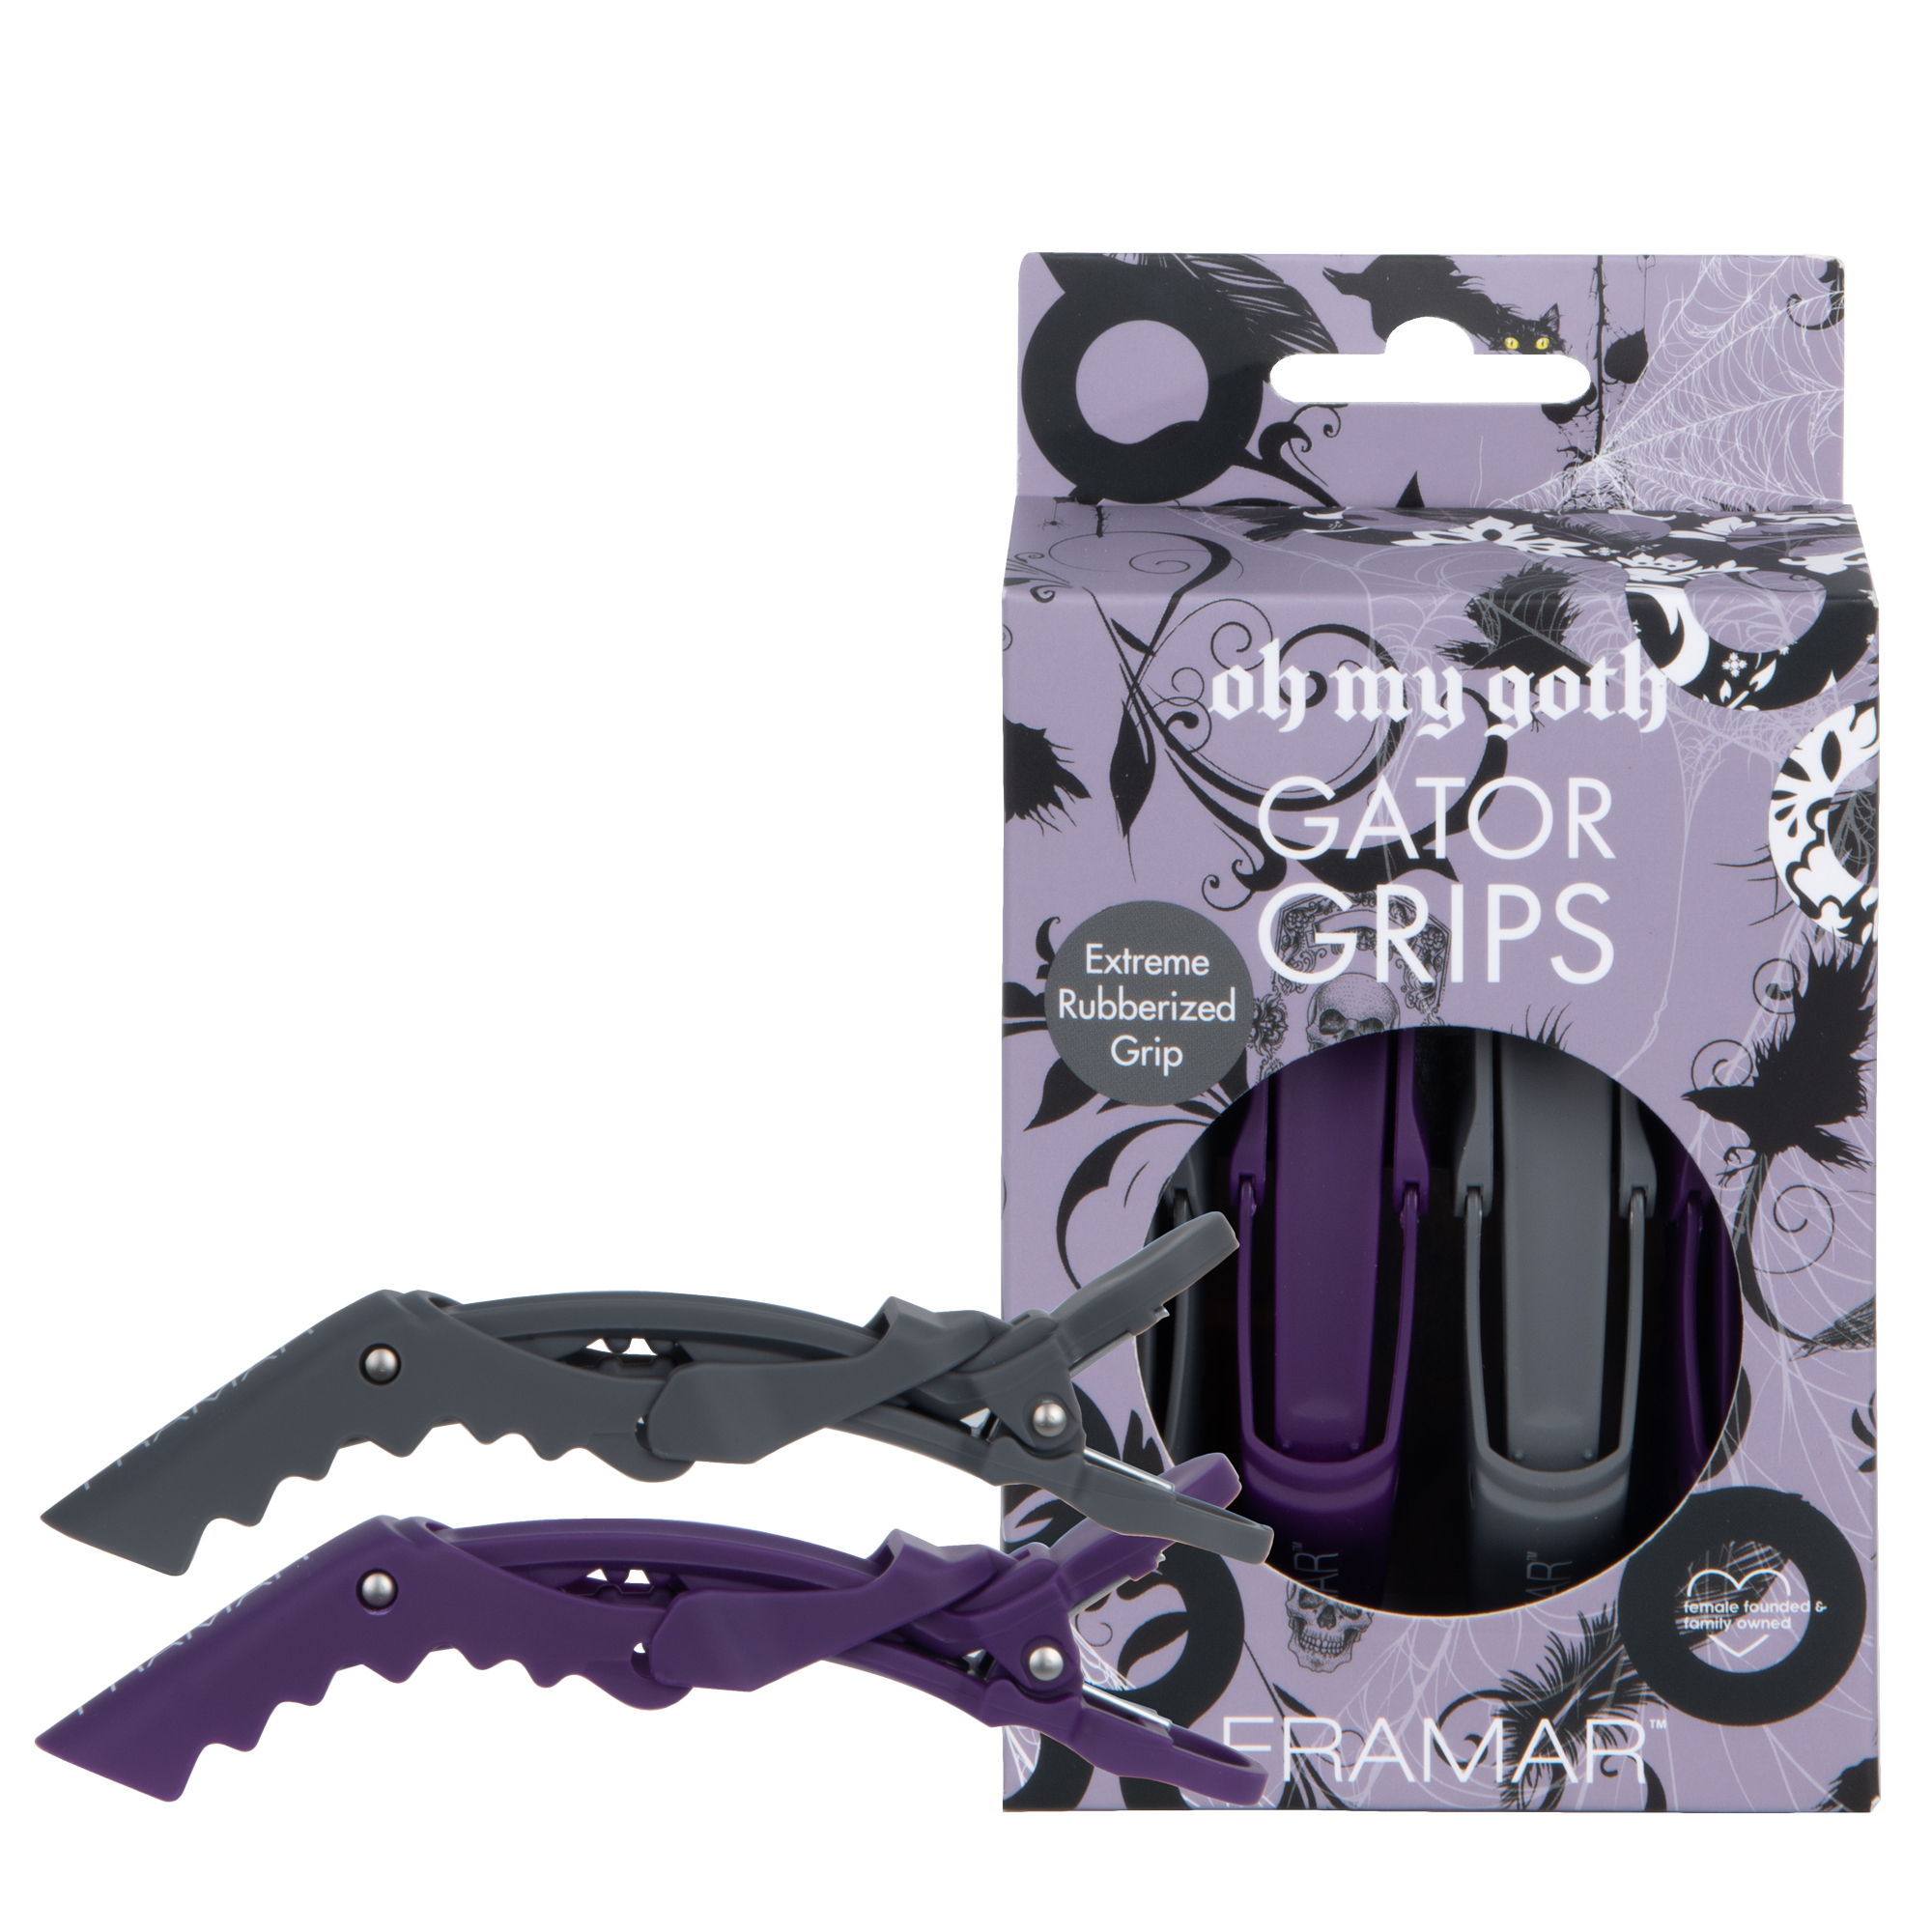 Framar Gator Grip Clips - Black